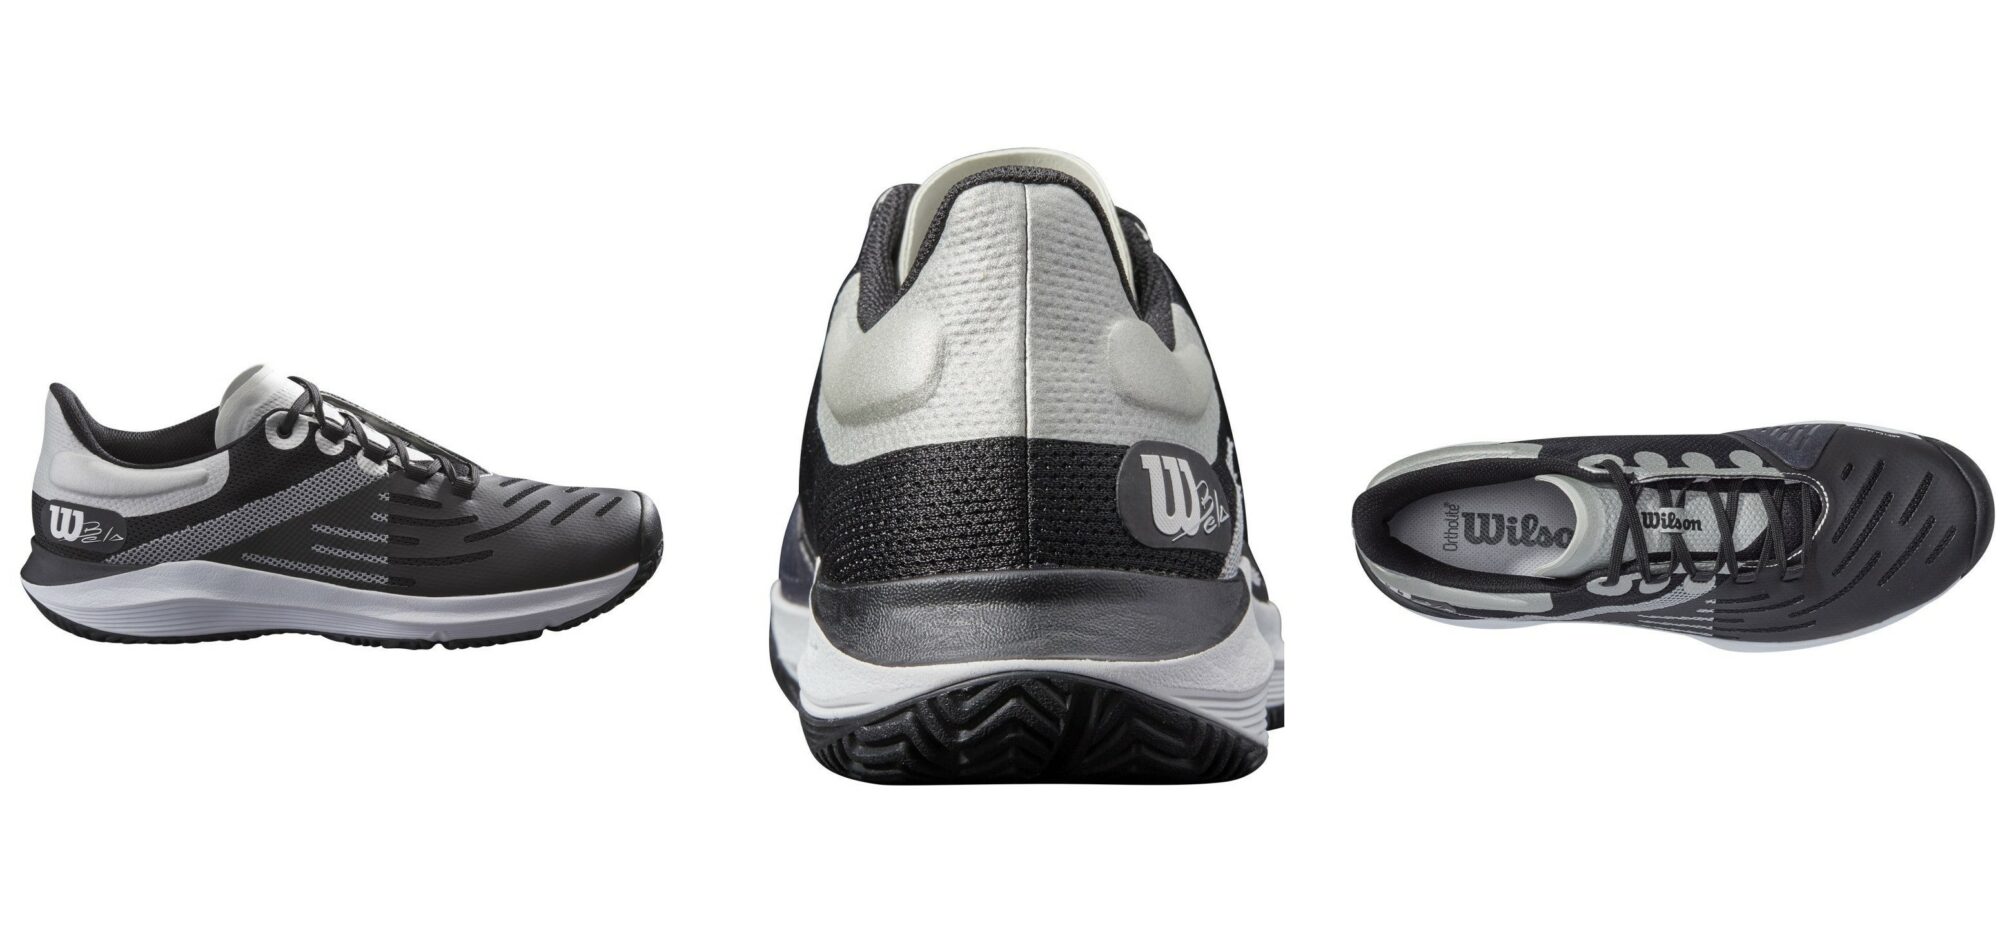 Wilson: the Kaos 3.0 Bela shoes